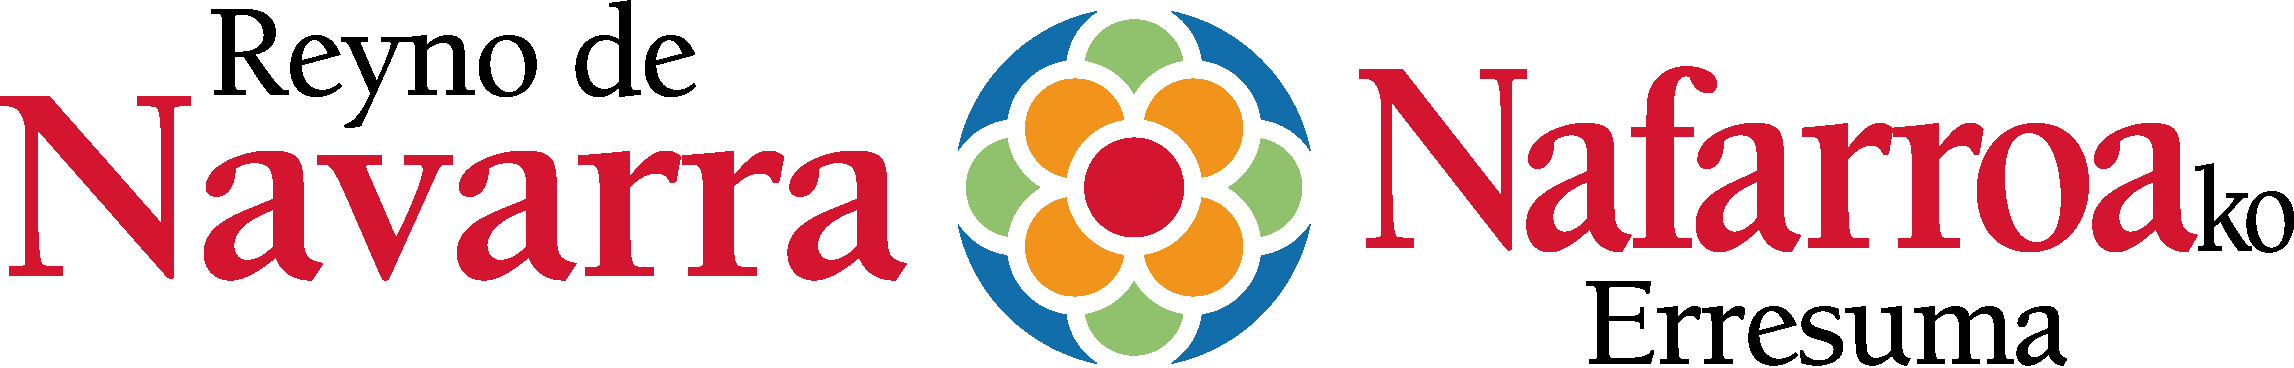 Logotipo Turismo Navarra